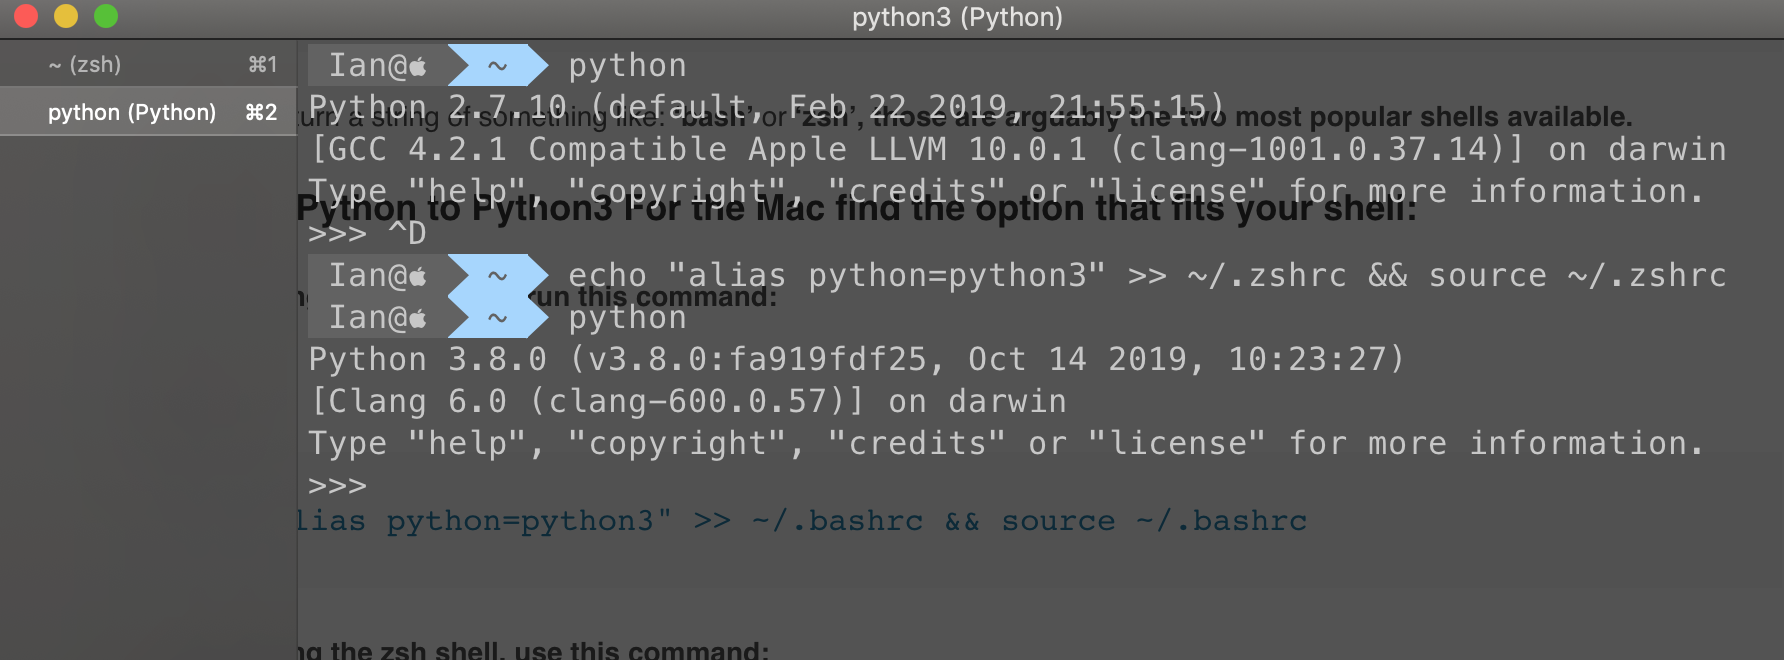 Default Python Command